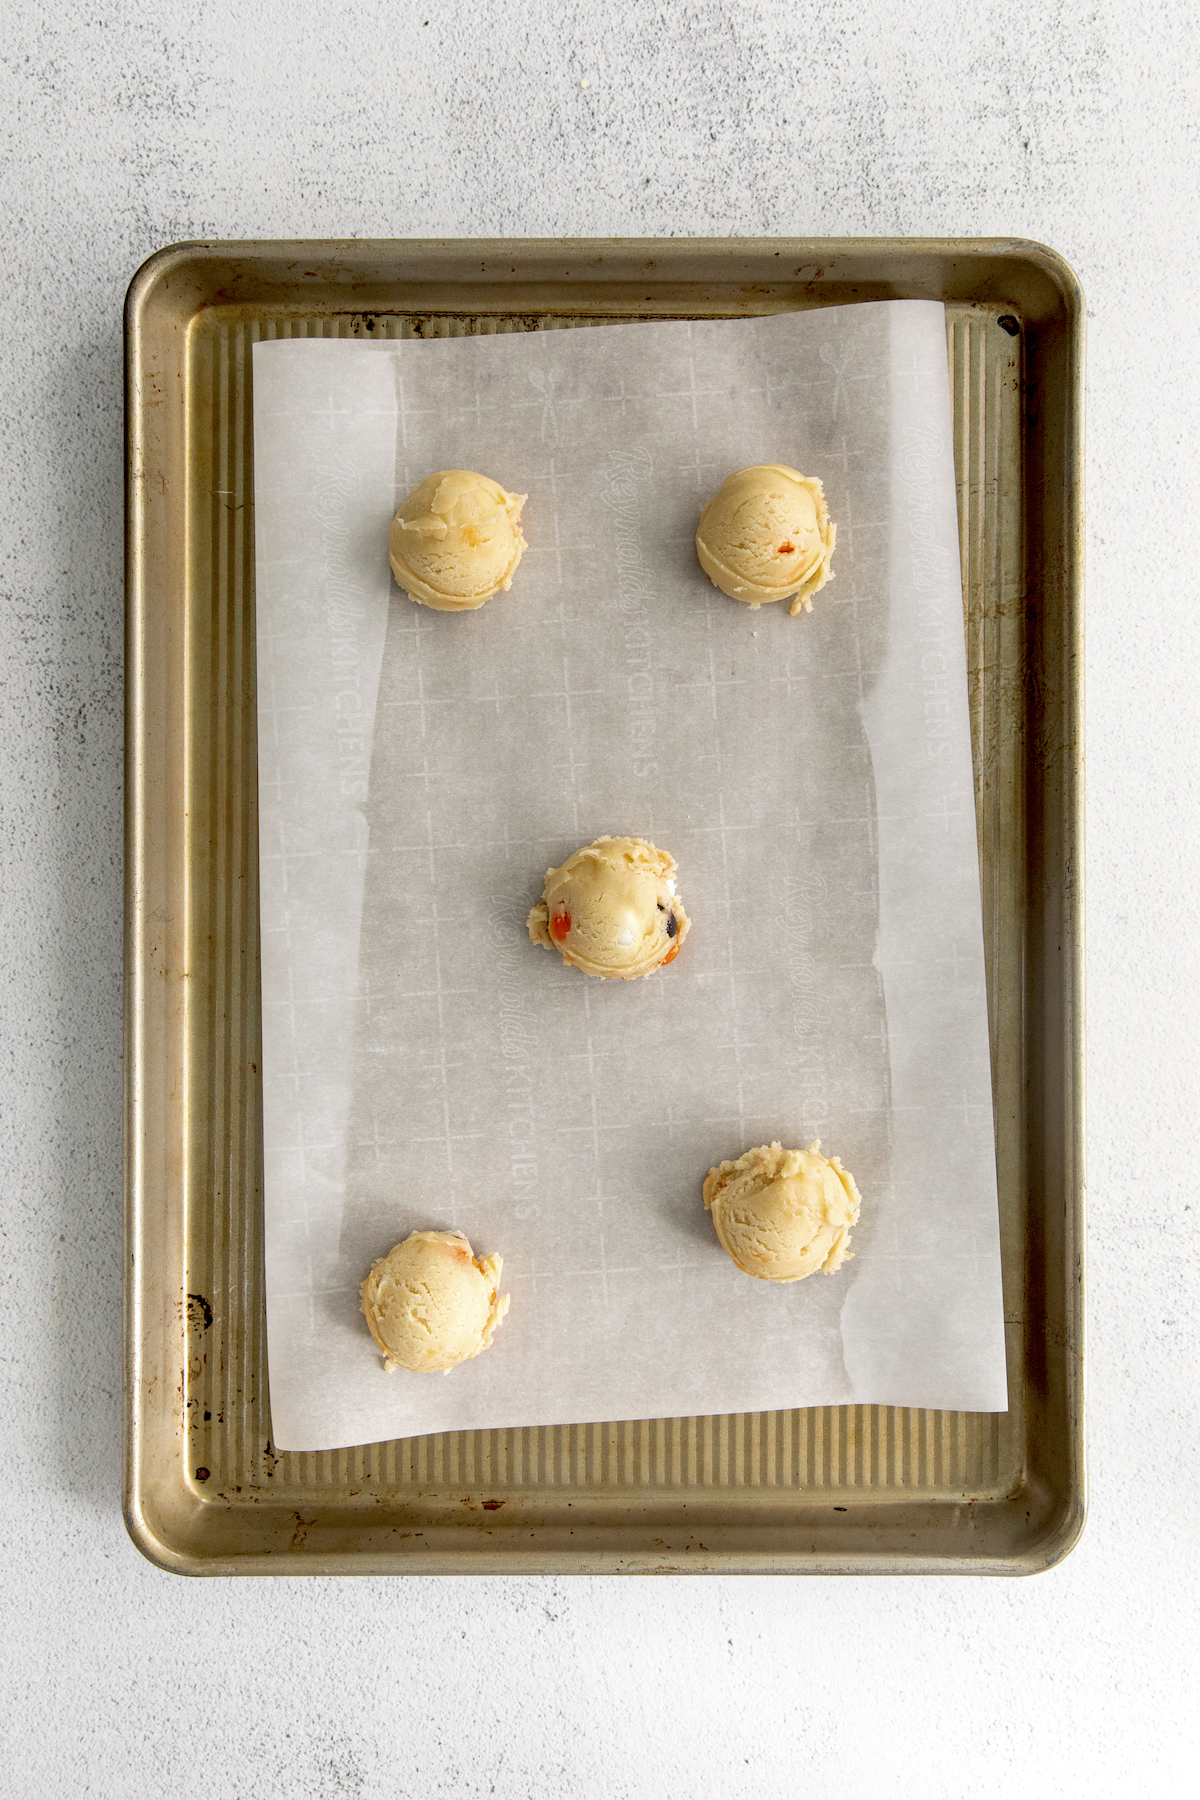 Raw Halloween cookie dough on a baking sheet